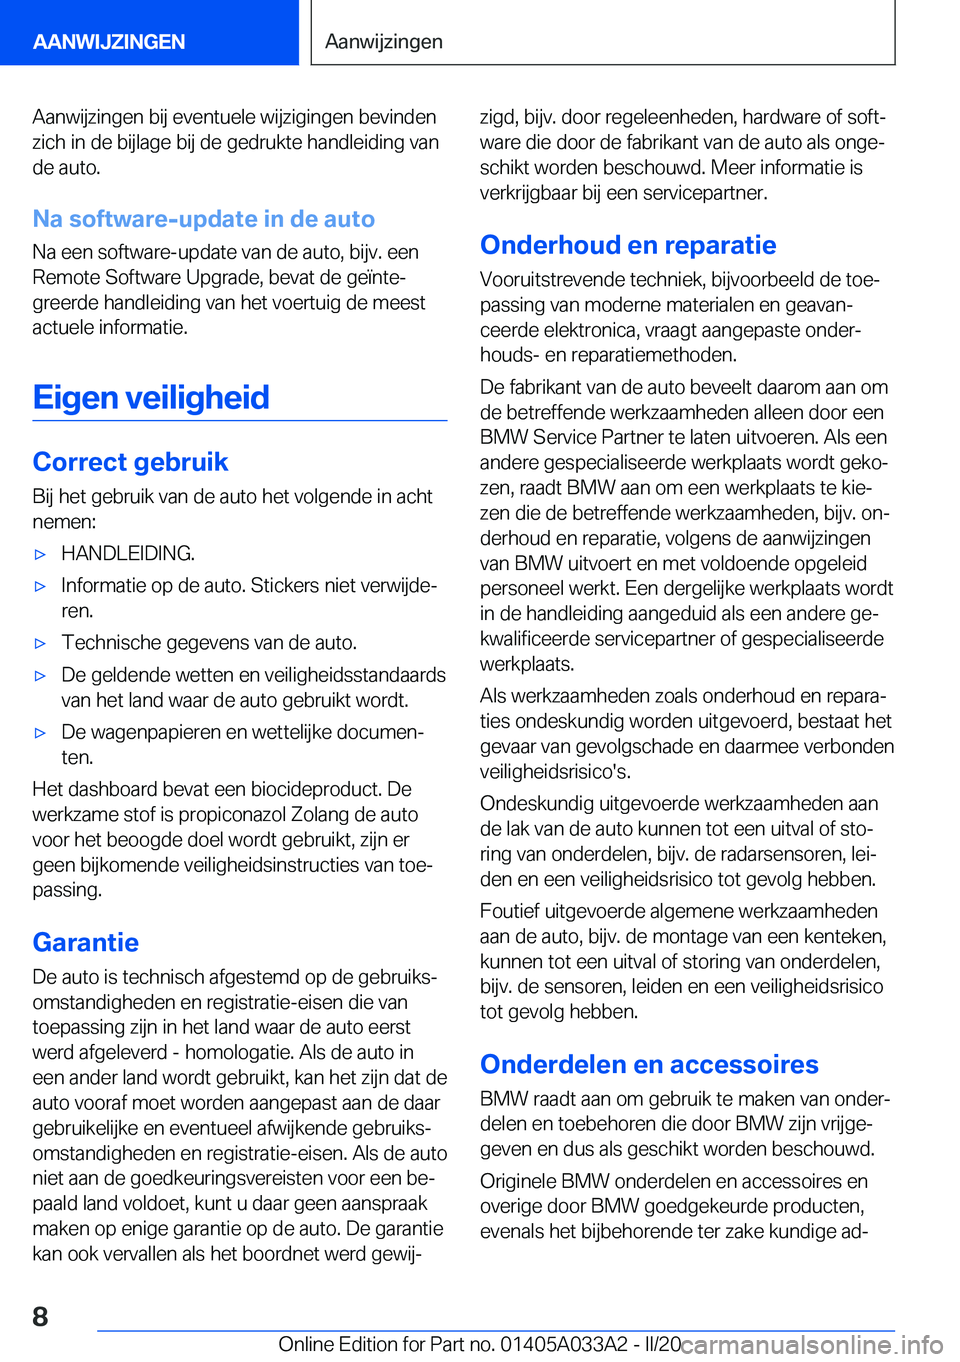 BMW M8 GRAN COUPE 2020  Instructieboekjes (in Dutch) �A�a�n�w�i�j�z�i�n�g�e�n��b�i�j��e�v�e�n�t�u�e�l�e��w�i�j�z�i�g�i�n�g�e�n��b�e�v�i�n�d�e�n�z�i�c�h��i�n��d�e��b�i�j�l�a�g�e��b�i�j��d�e��g�e�d�r�u�k�t�e��h�a�n�d�l�e�i�d�i�n�g��v�a�n
�d�e�